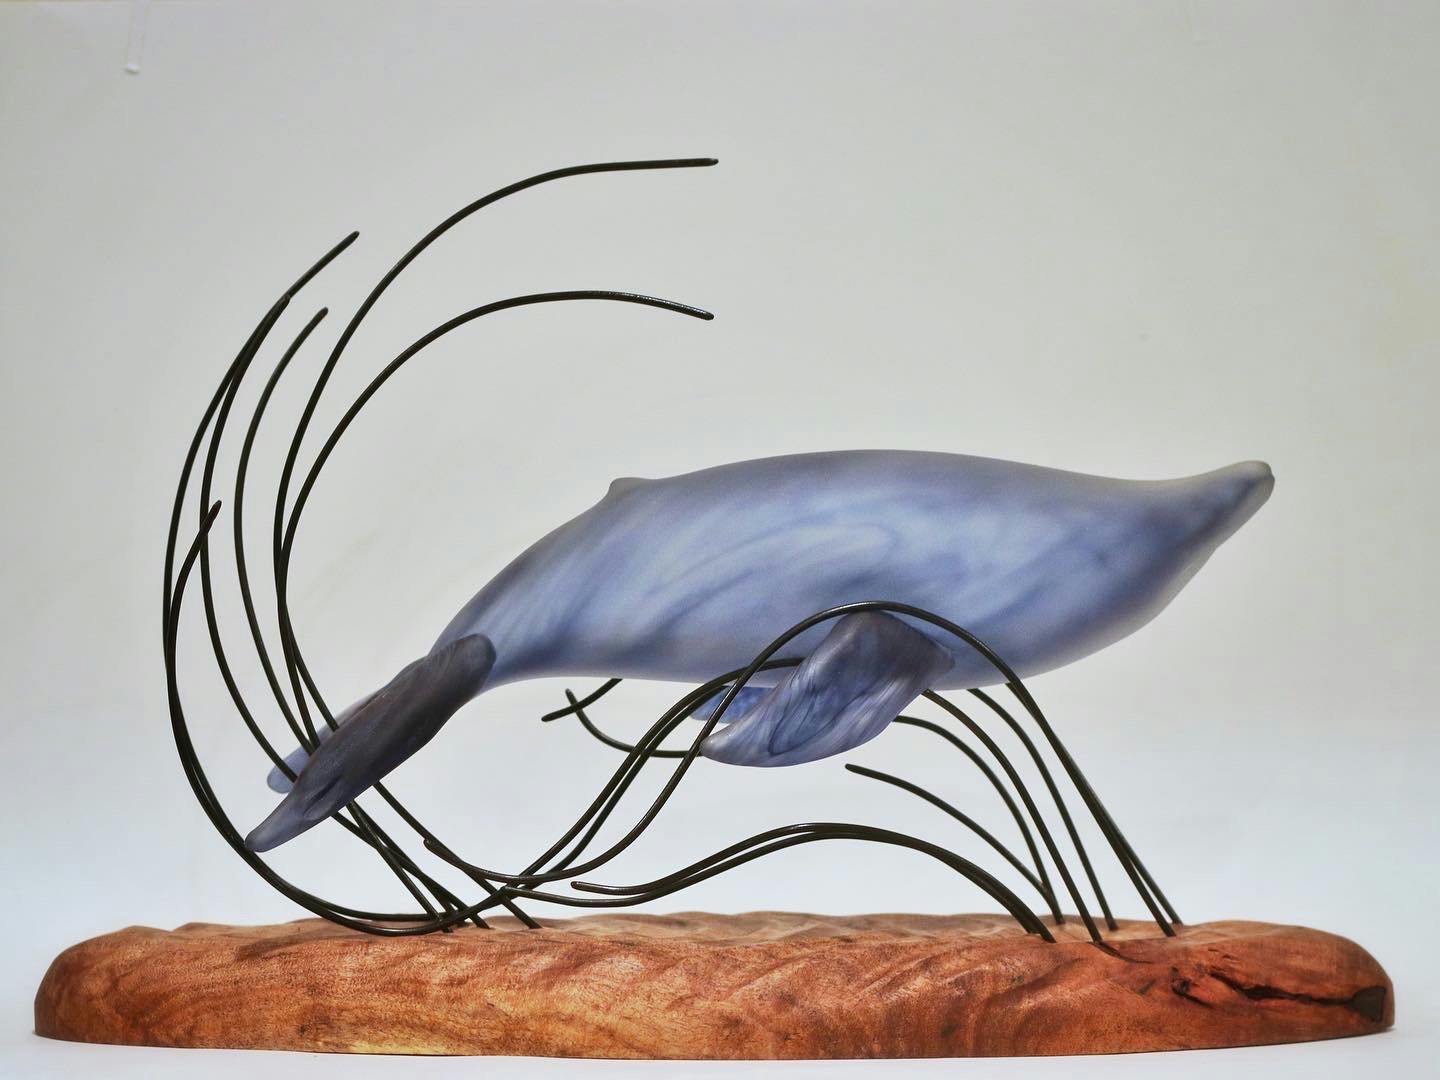 'Glass Humpback' piece by Brian Nguyen